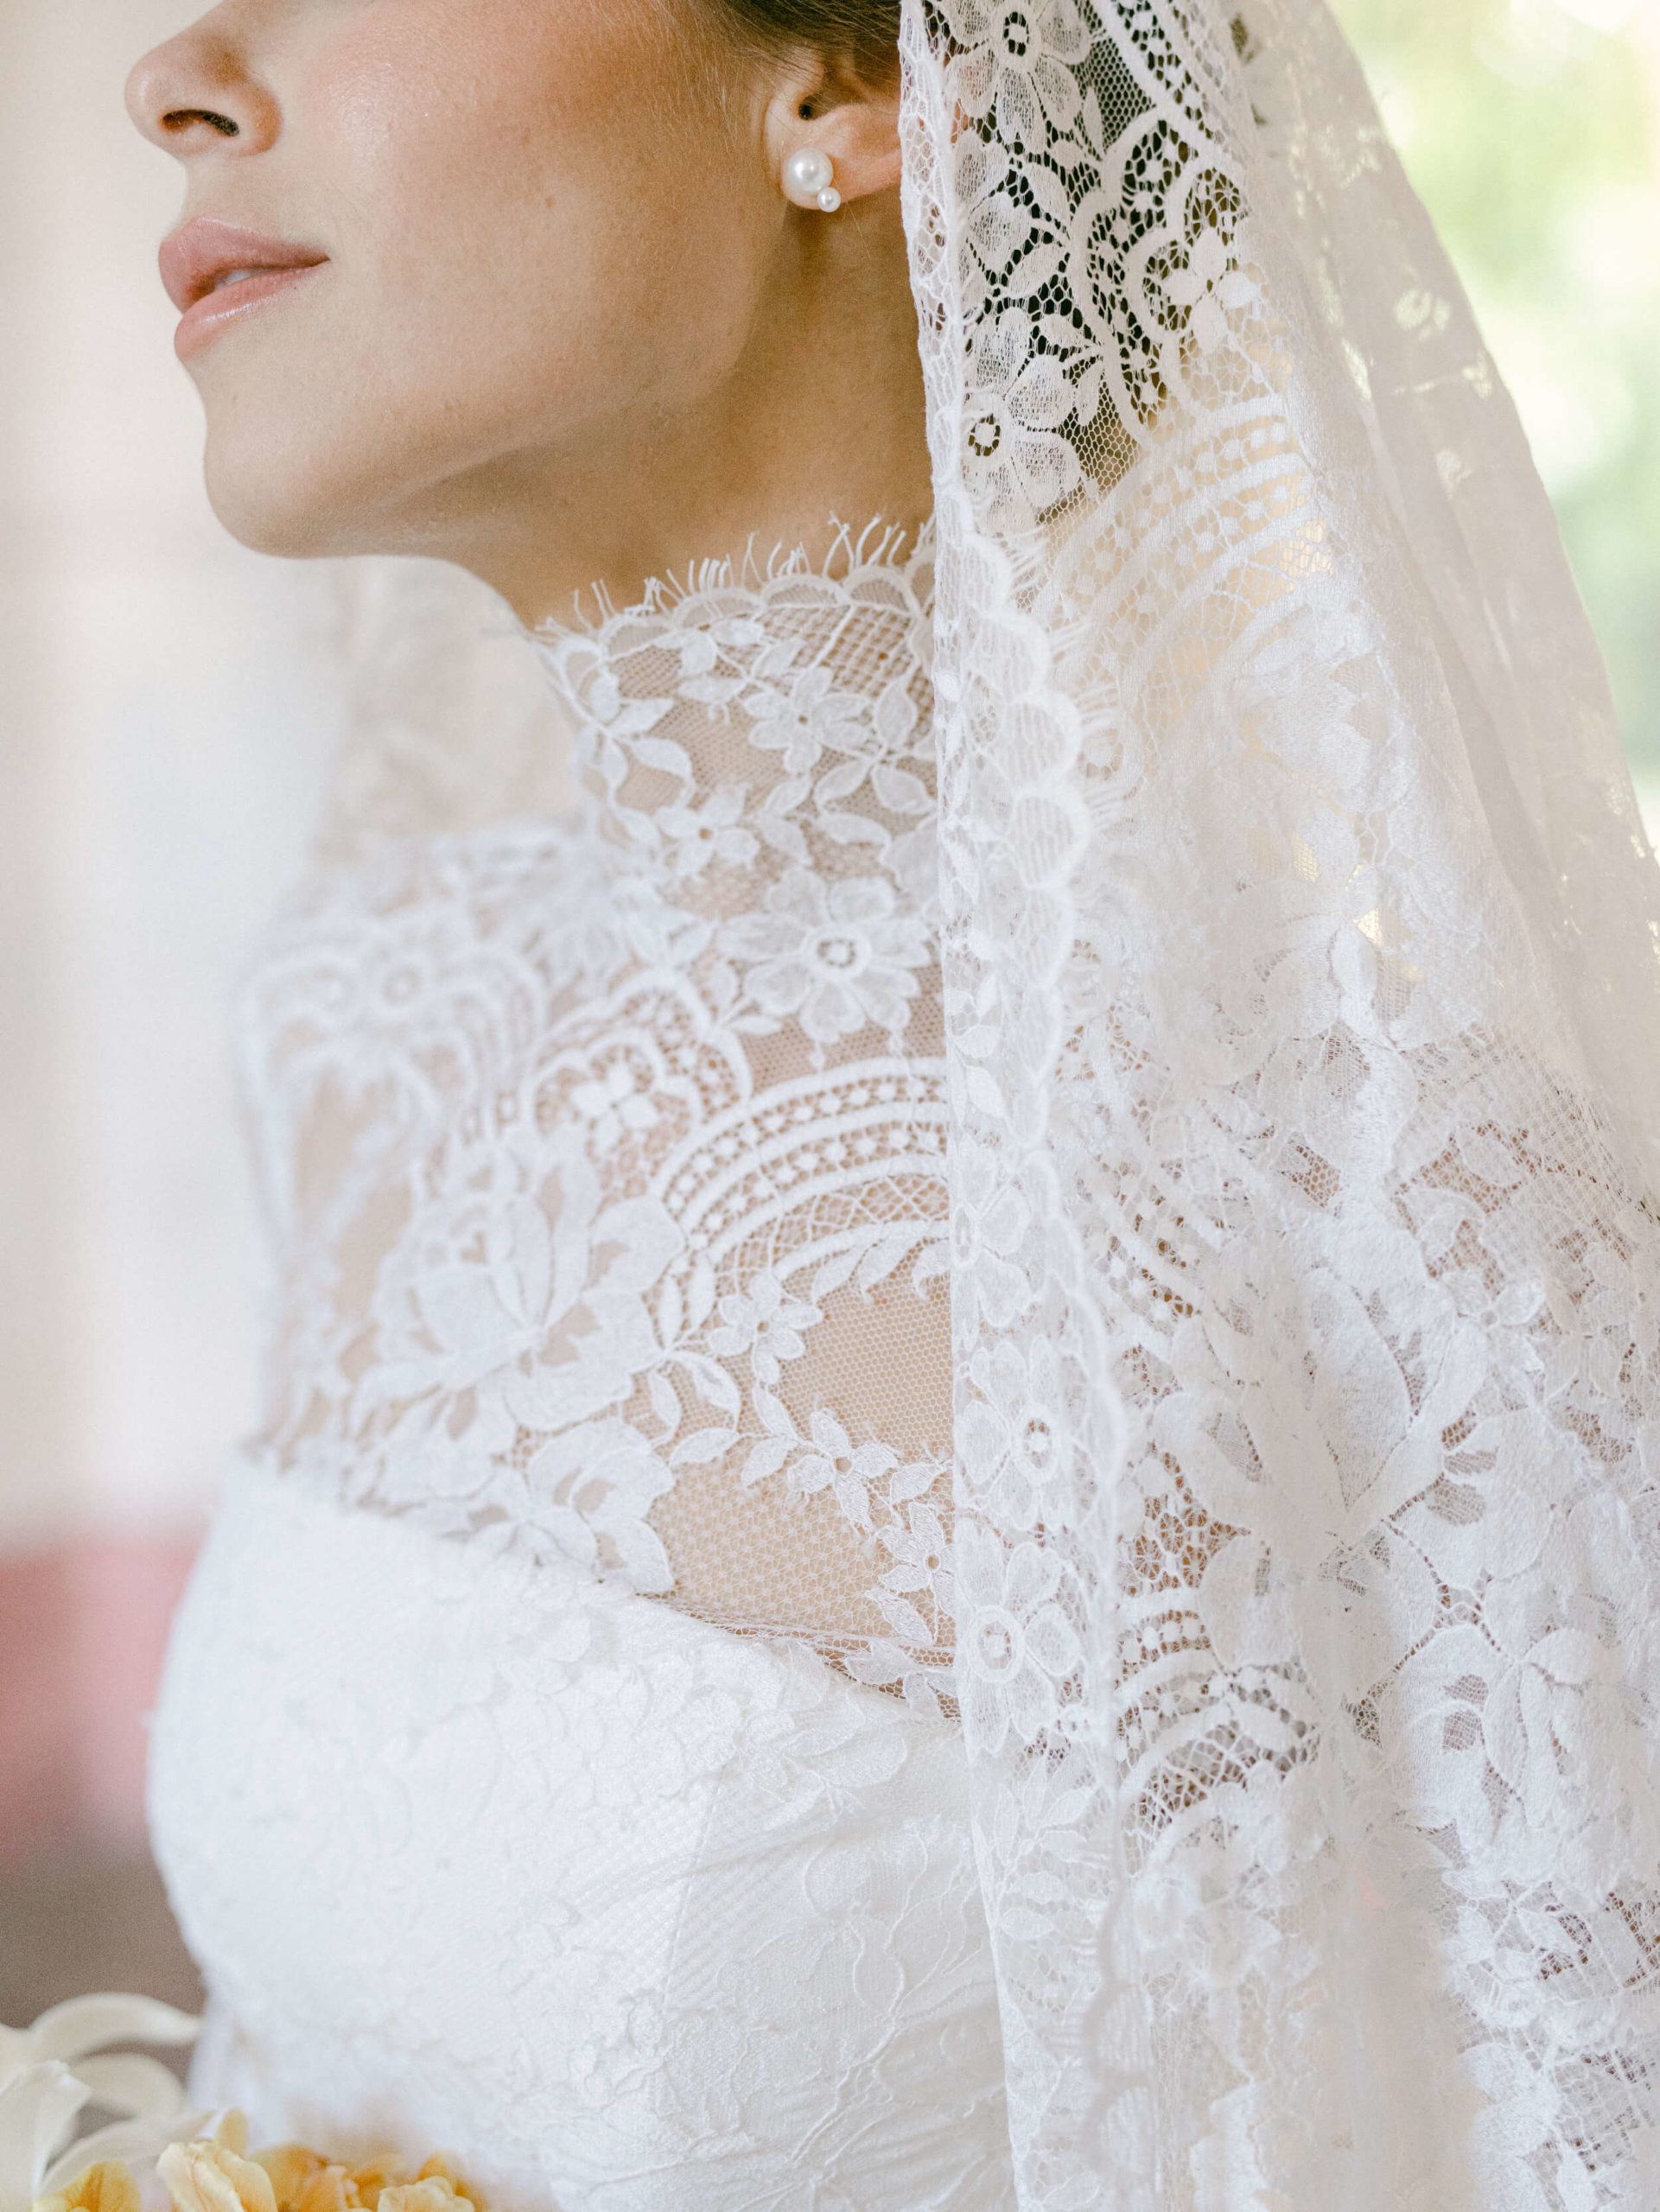 Closeup of bride